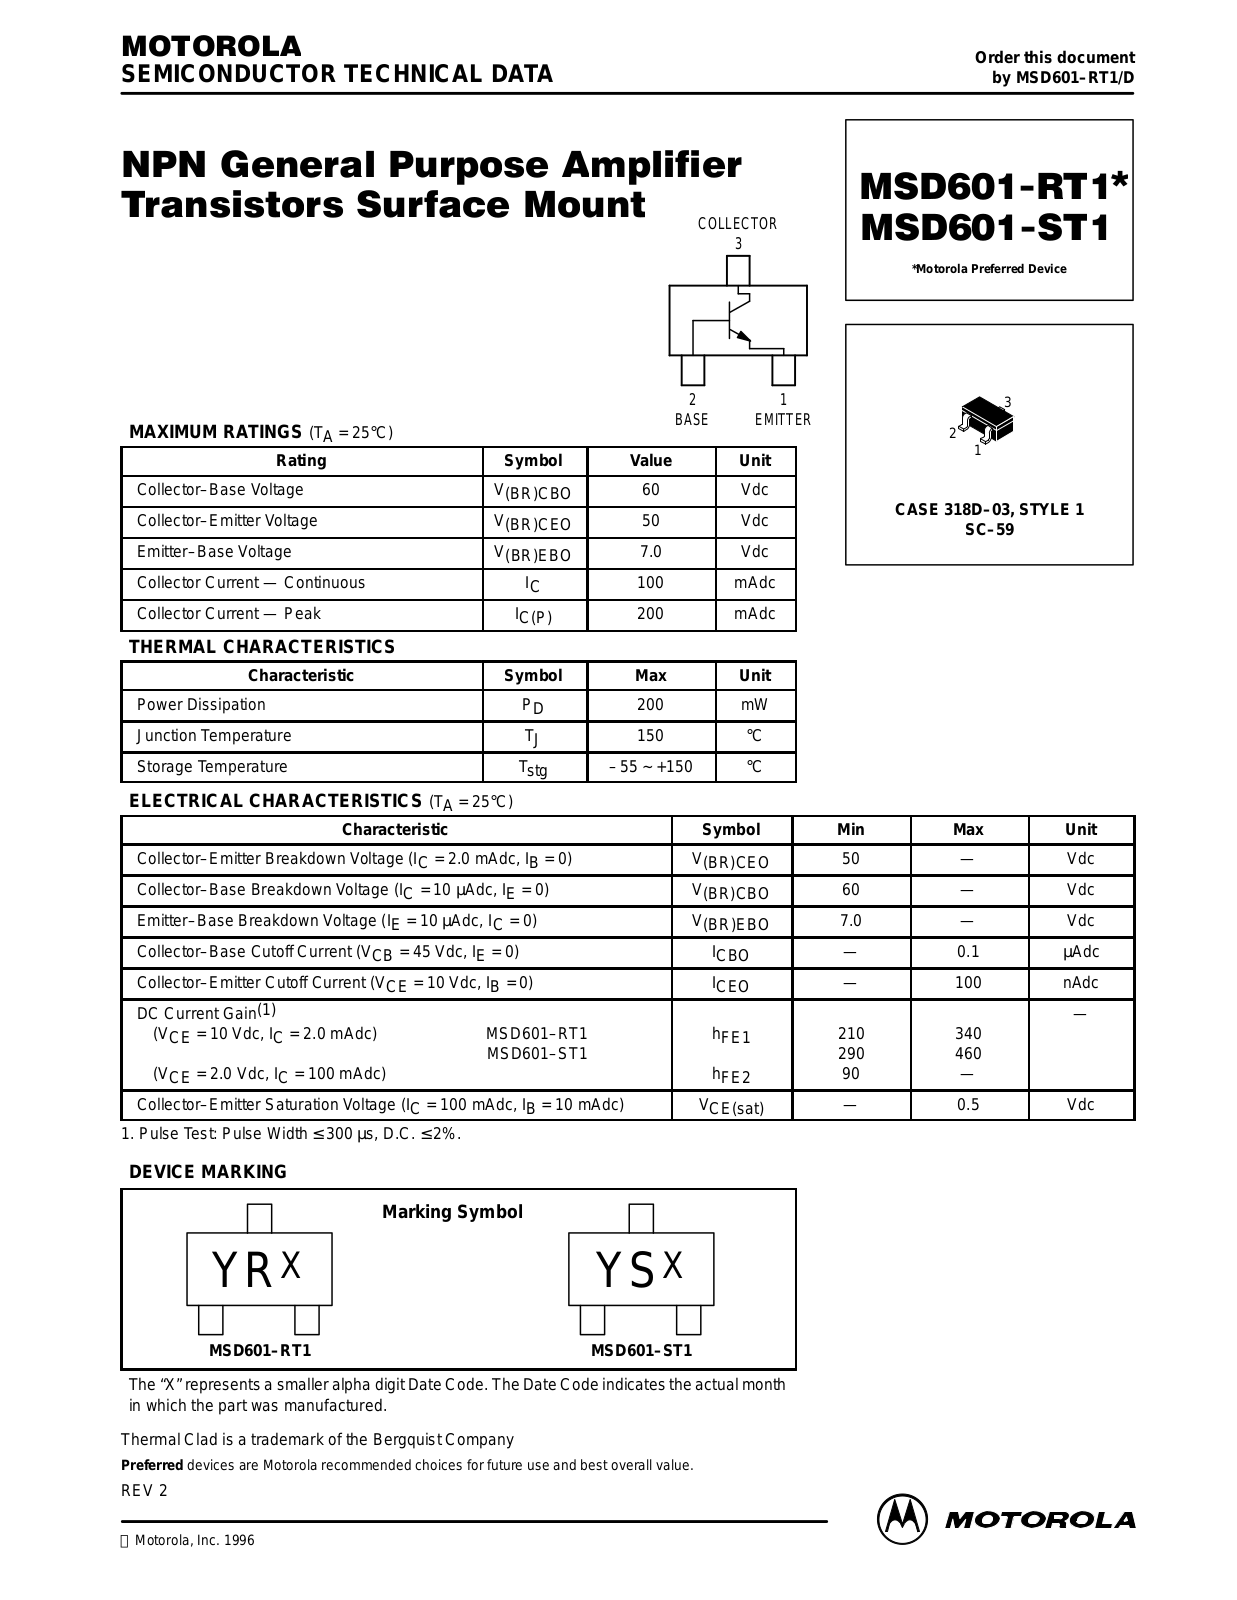 Motorola MSD601-RT1 Datasheet